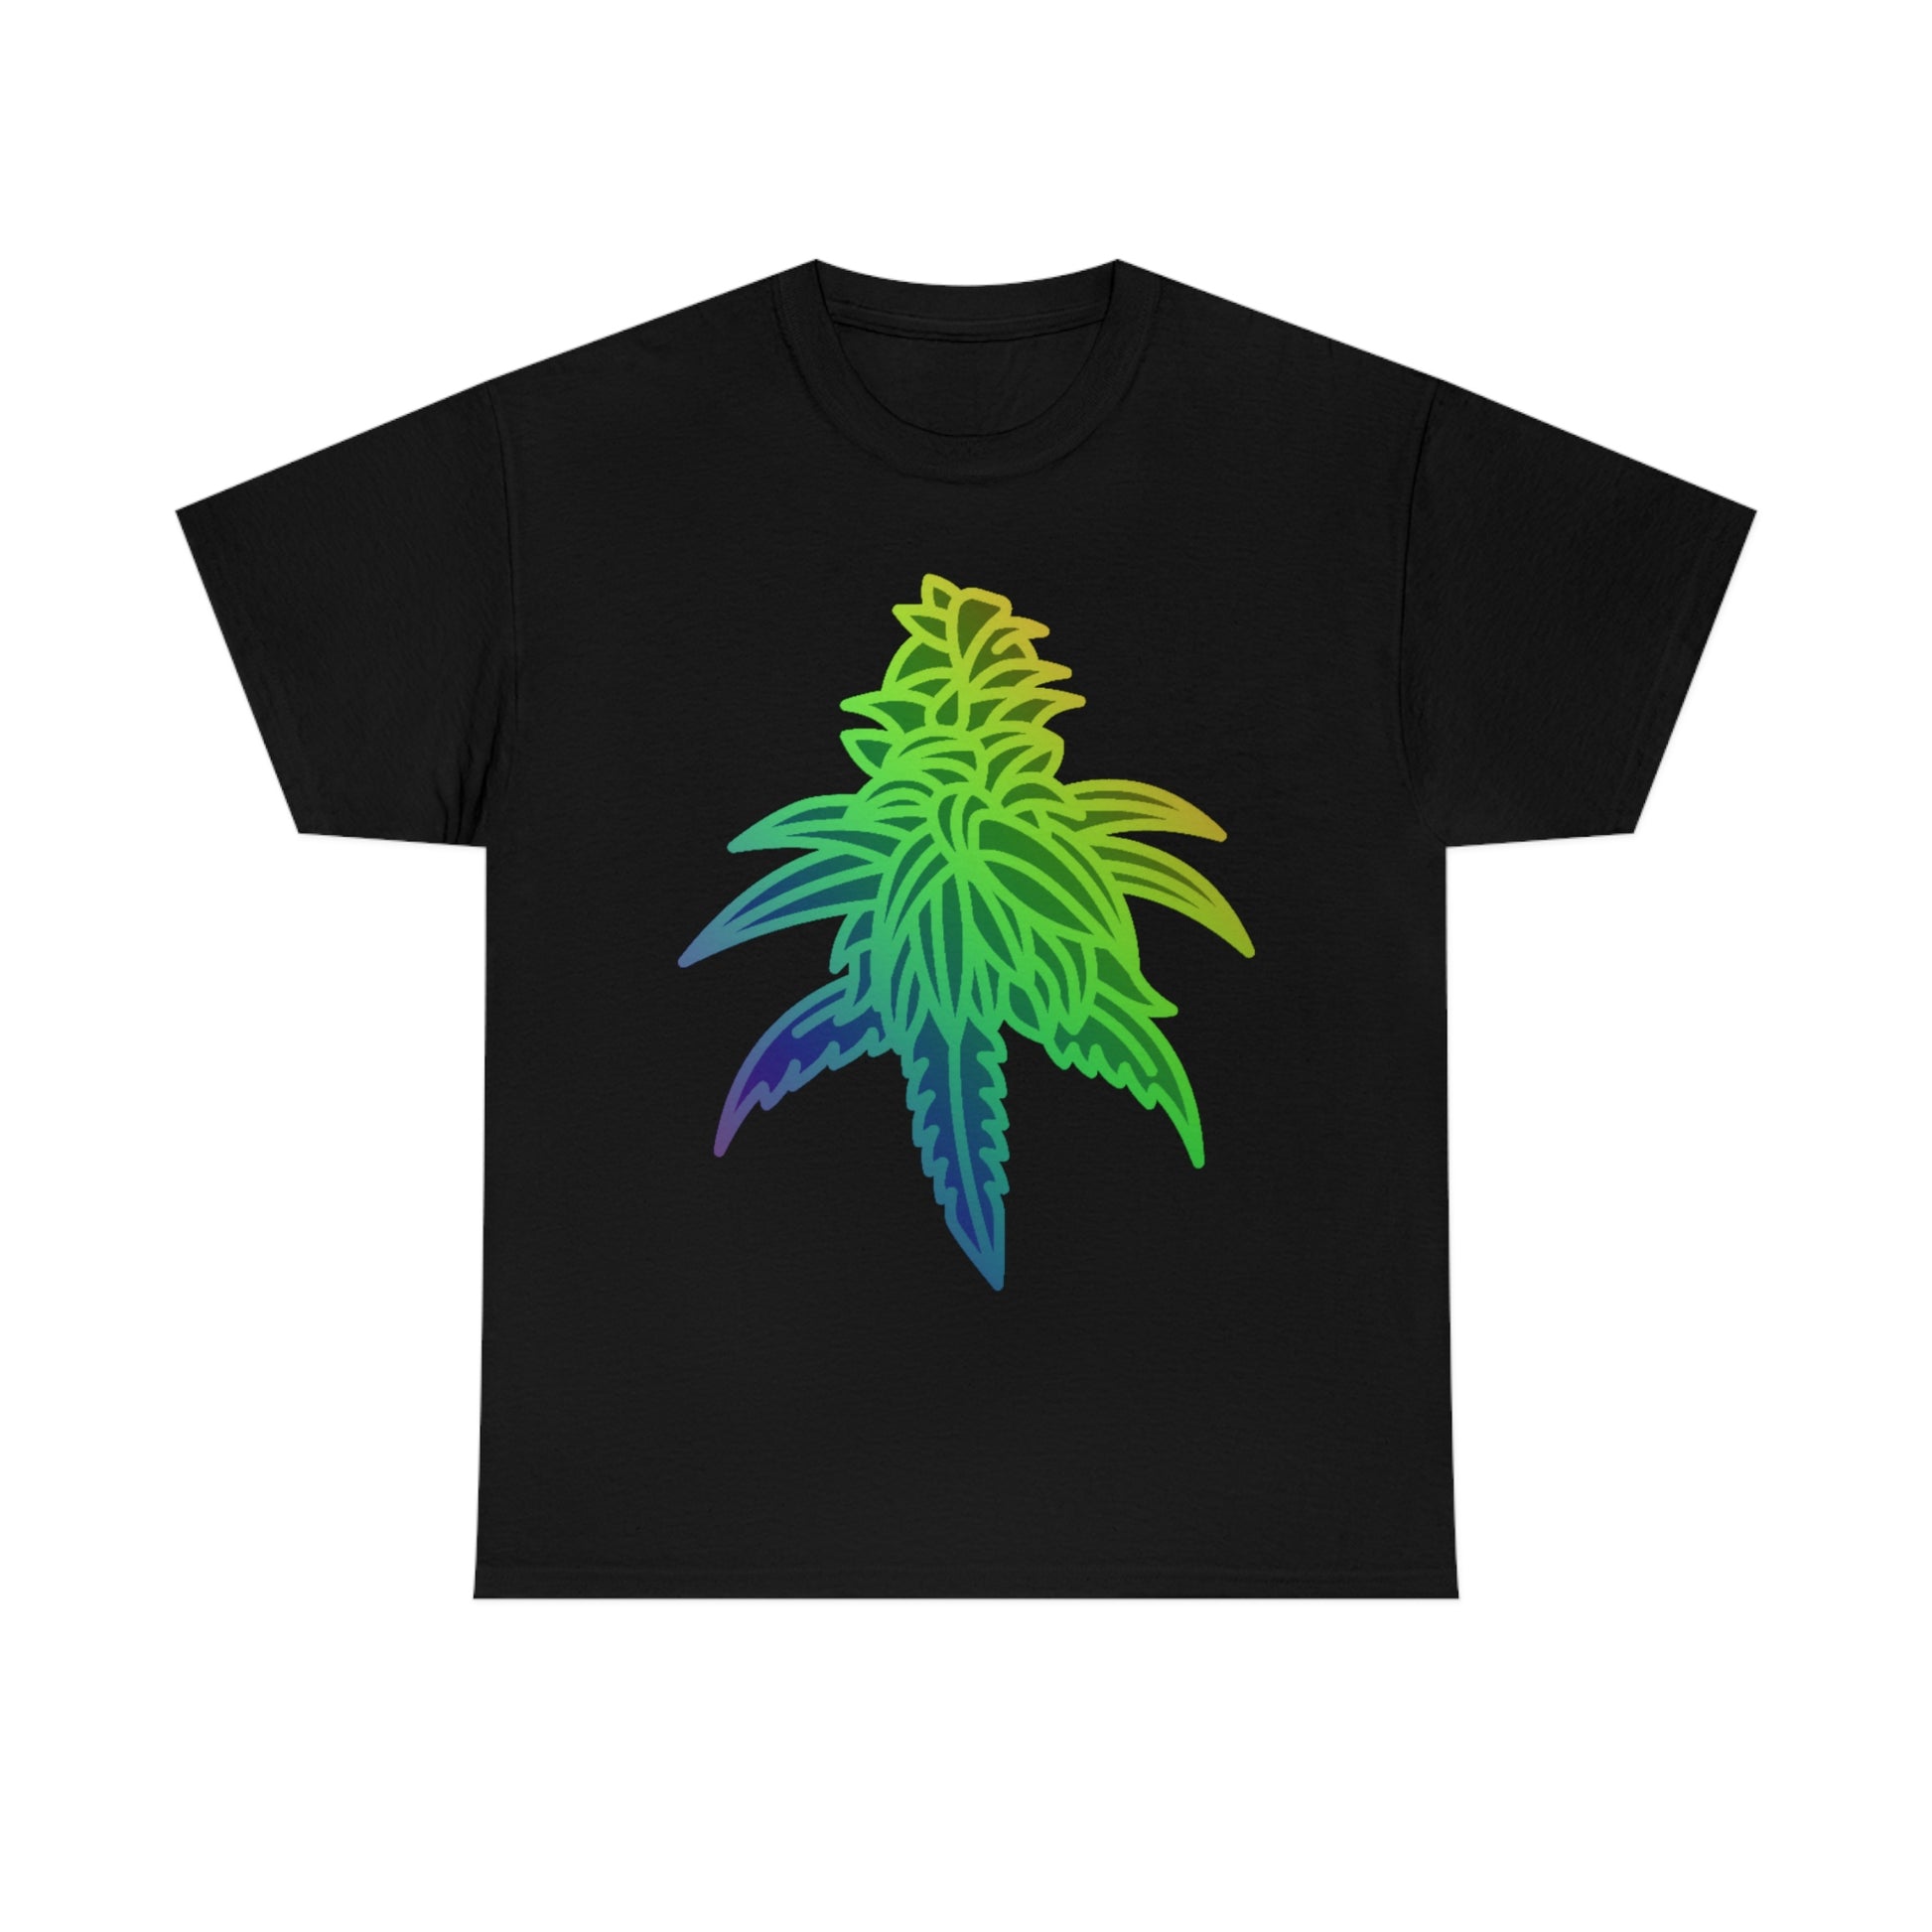 A Rainbow Sherbet Cannabis Tee with a rainbow marijuana leaf on it.